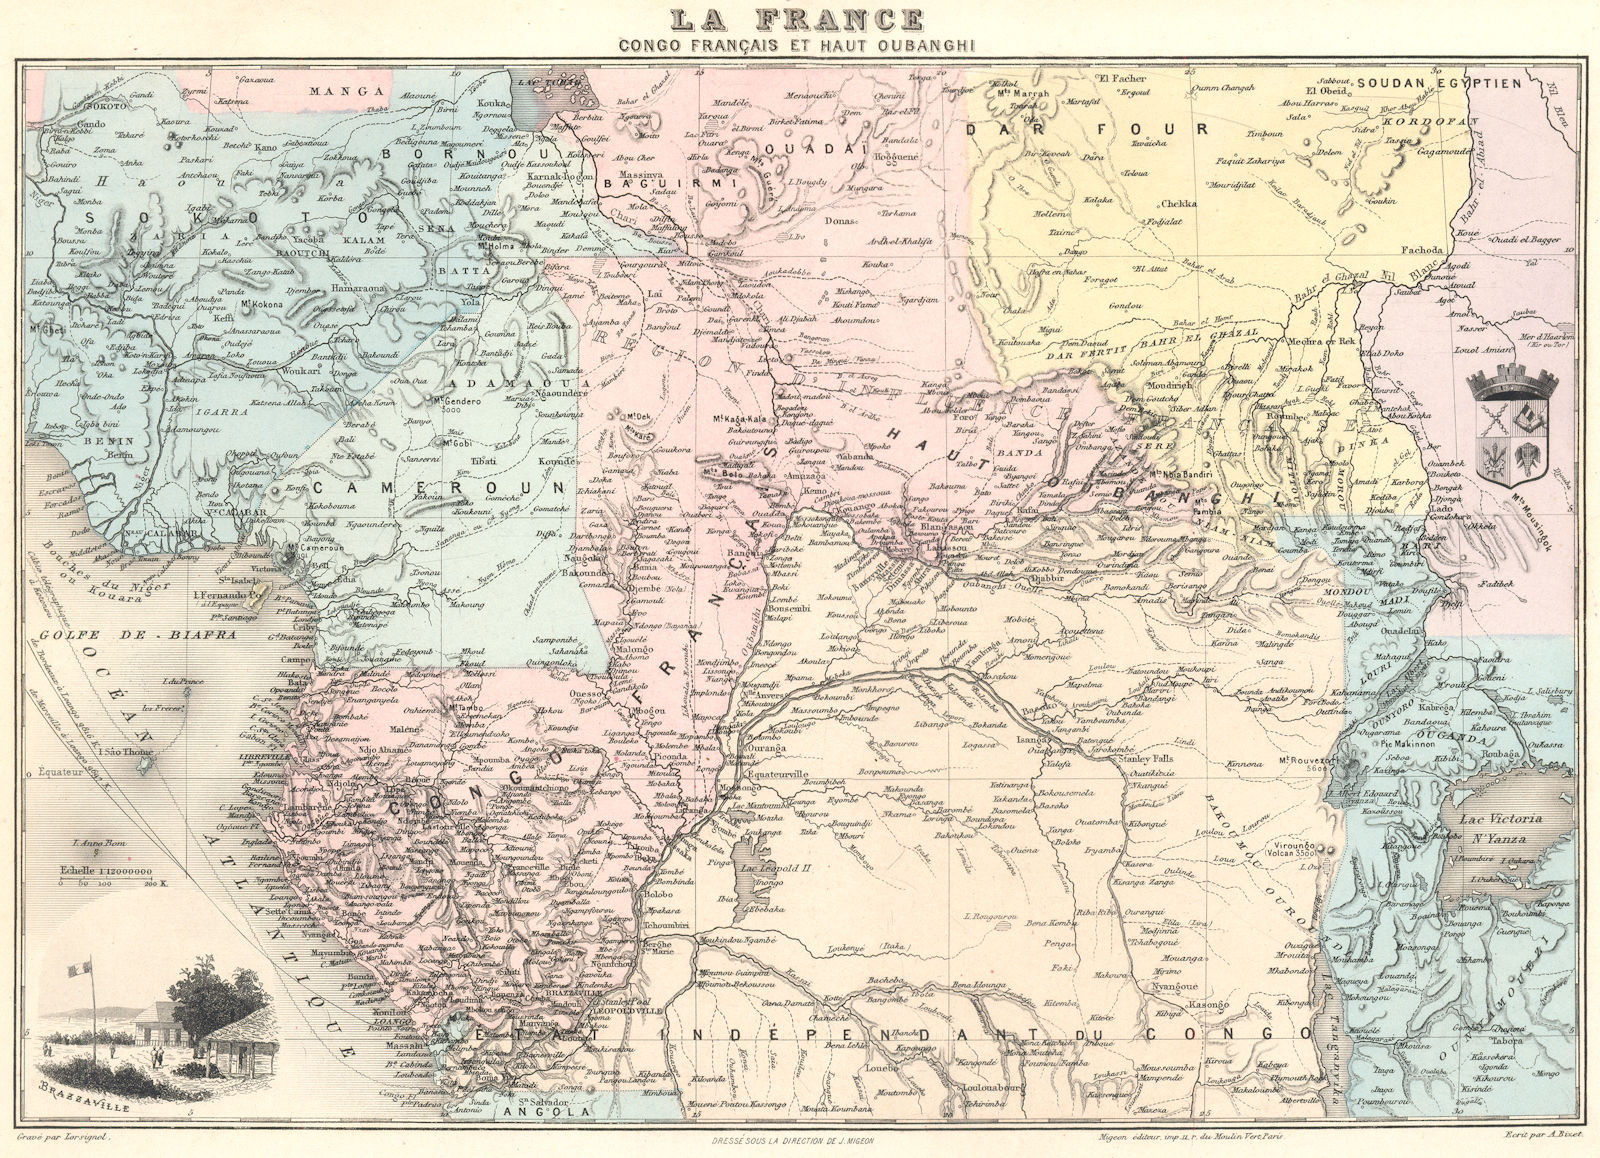 CONGO. Benin. Congo Français et Haut Oubanghi. Brazzaville. Vuillemin 1903 map